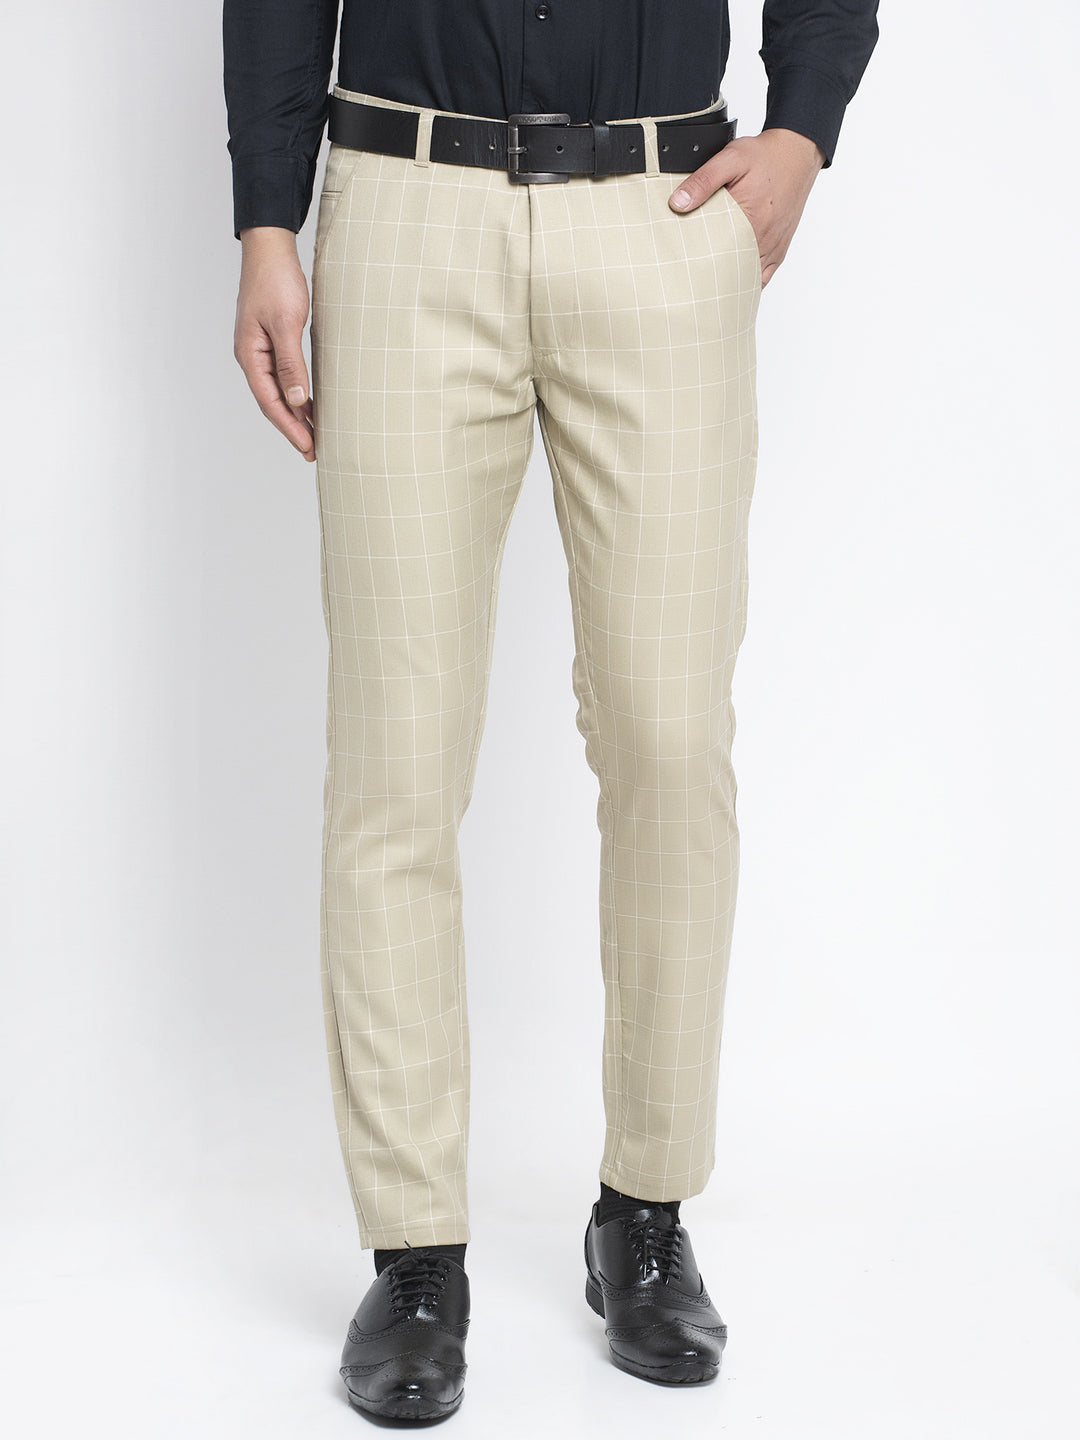 ELANHOOD Grey And Cream Formal Trouser For Men